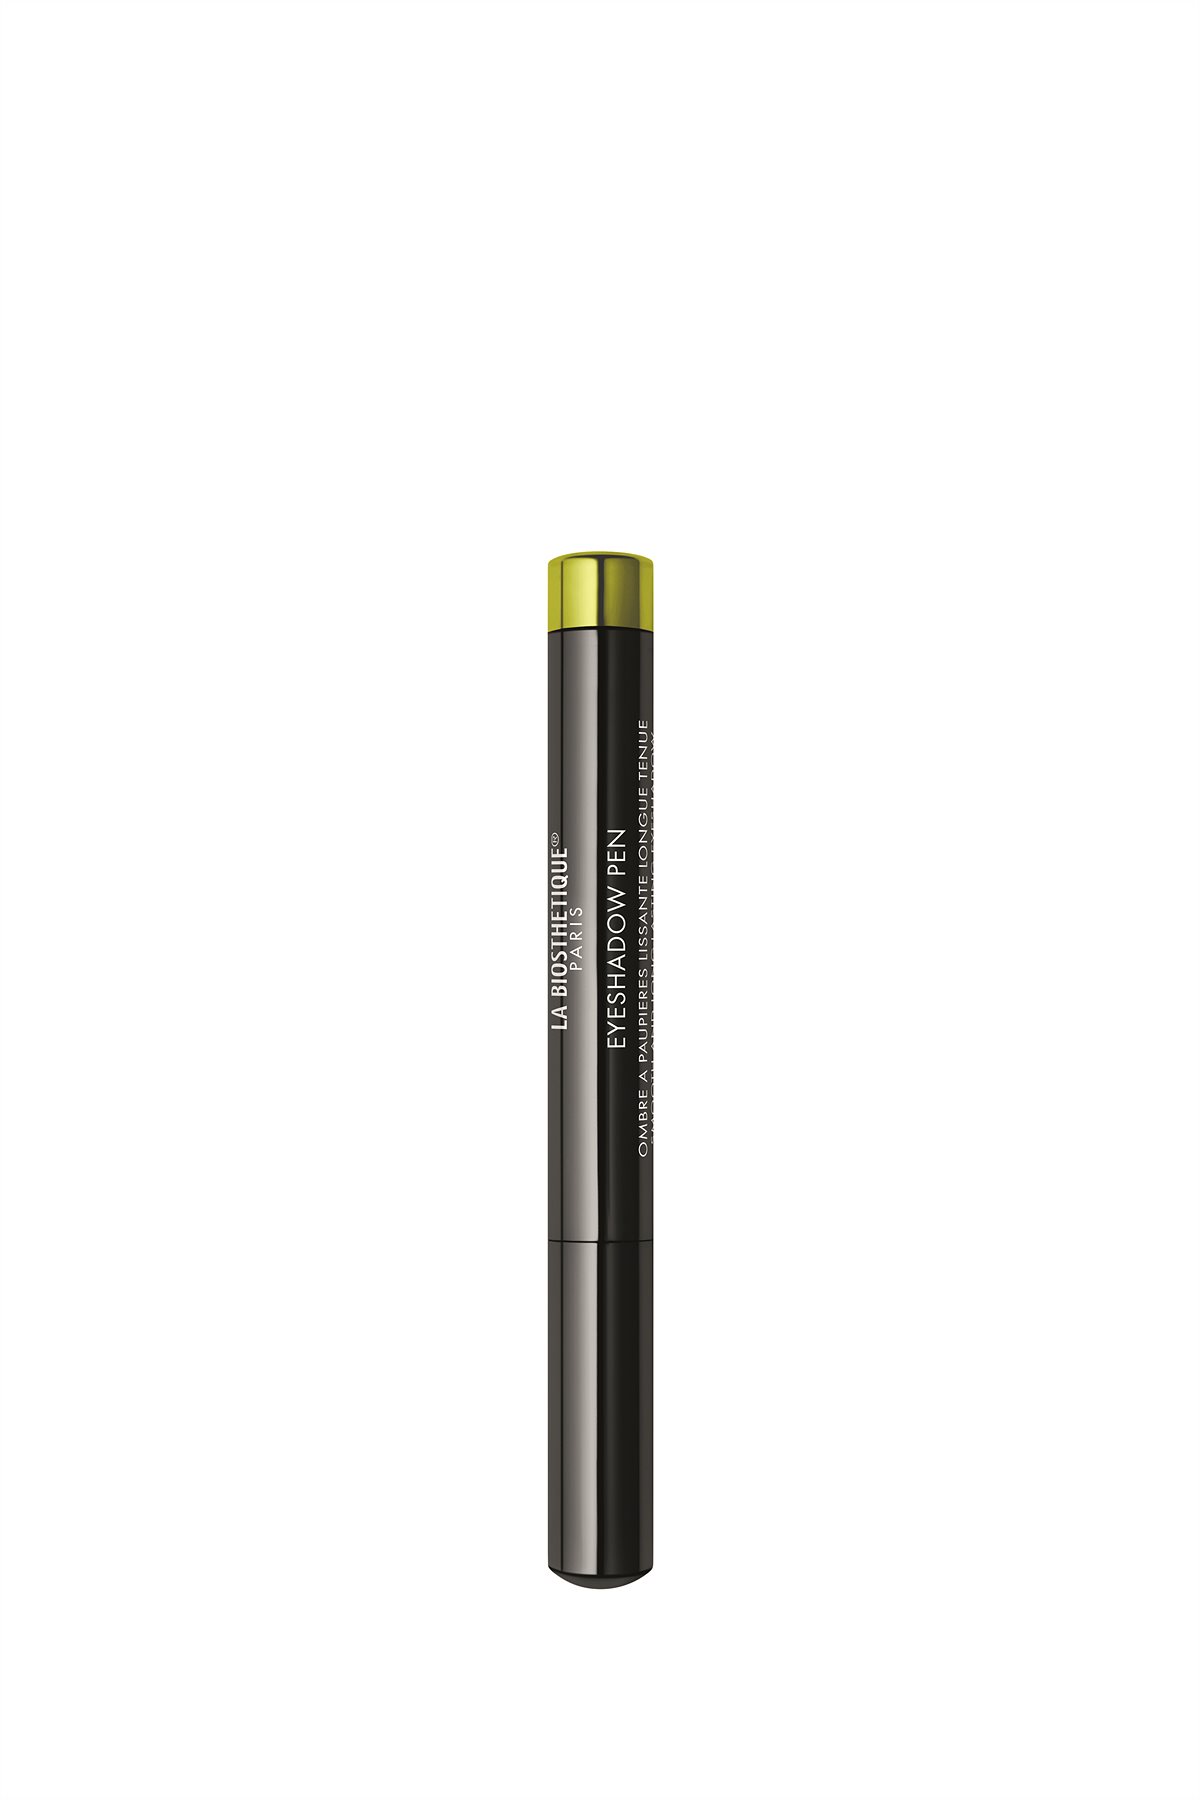 La Biosthétique_eyeshadow pen_lime_EUR 20,00